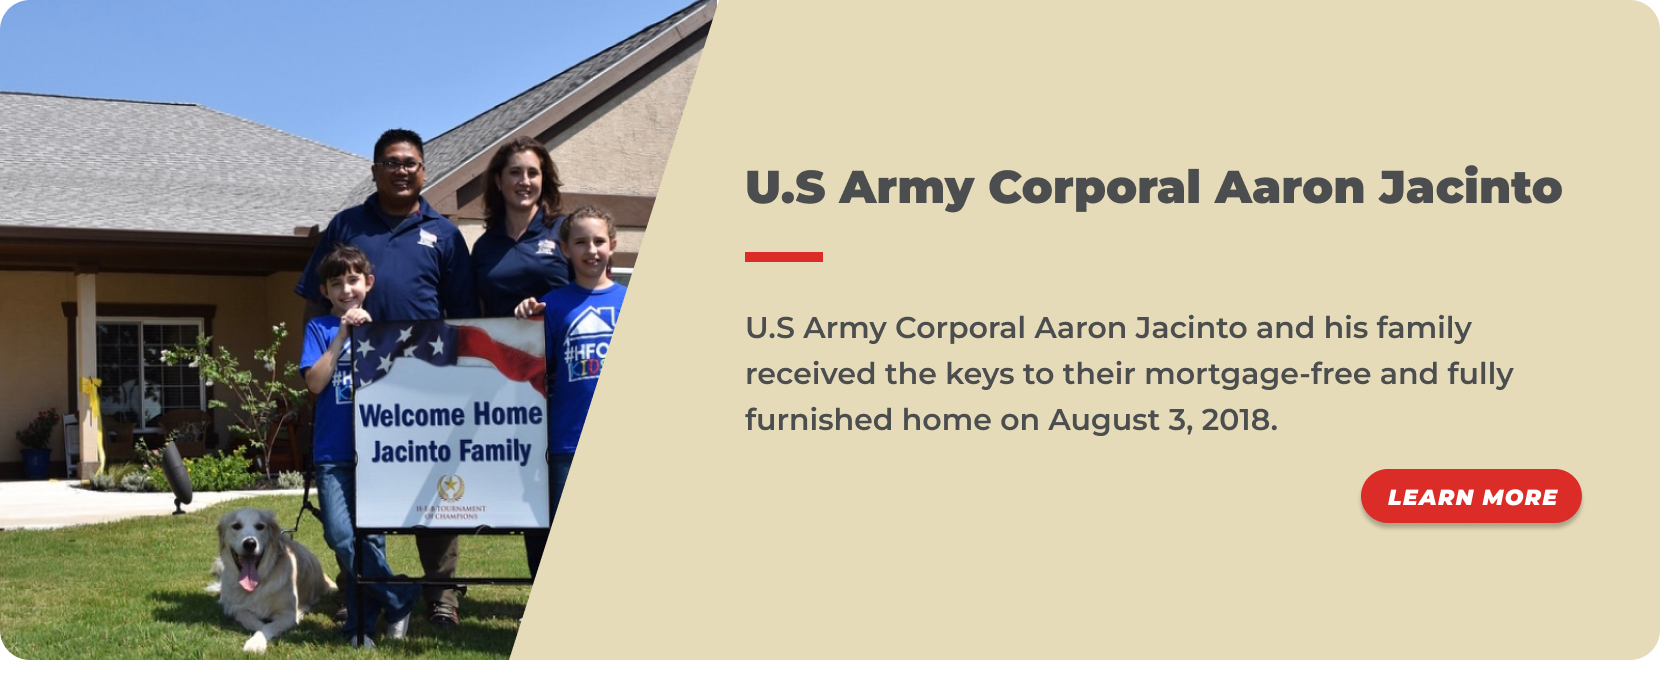 19 -U.S Army Corporal Aaron Jacinto